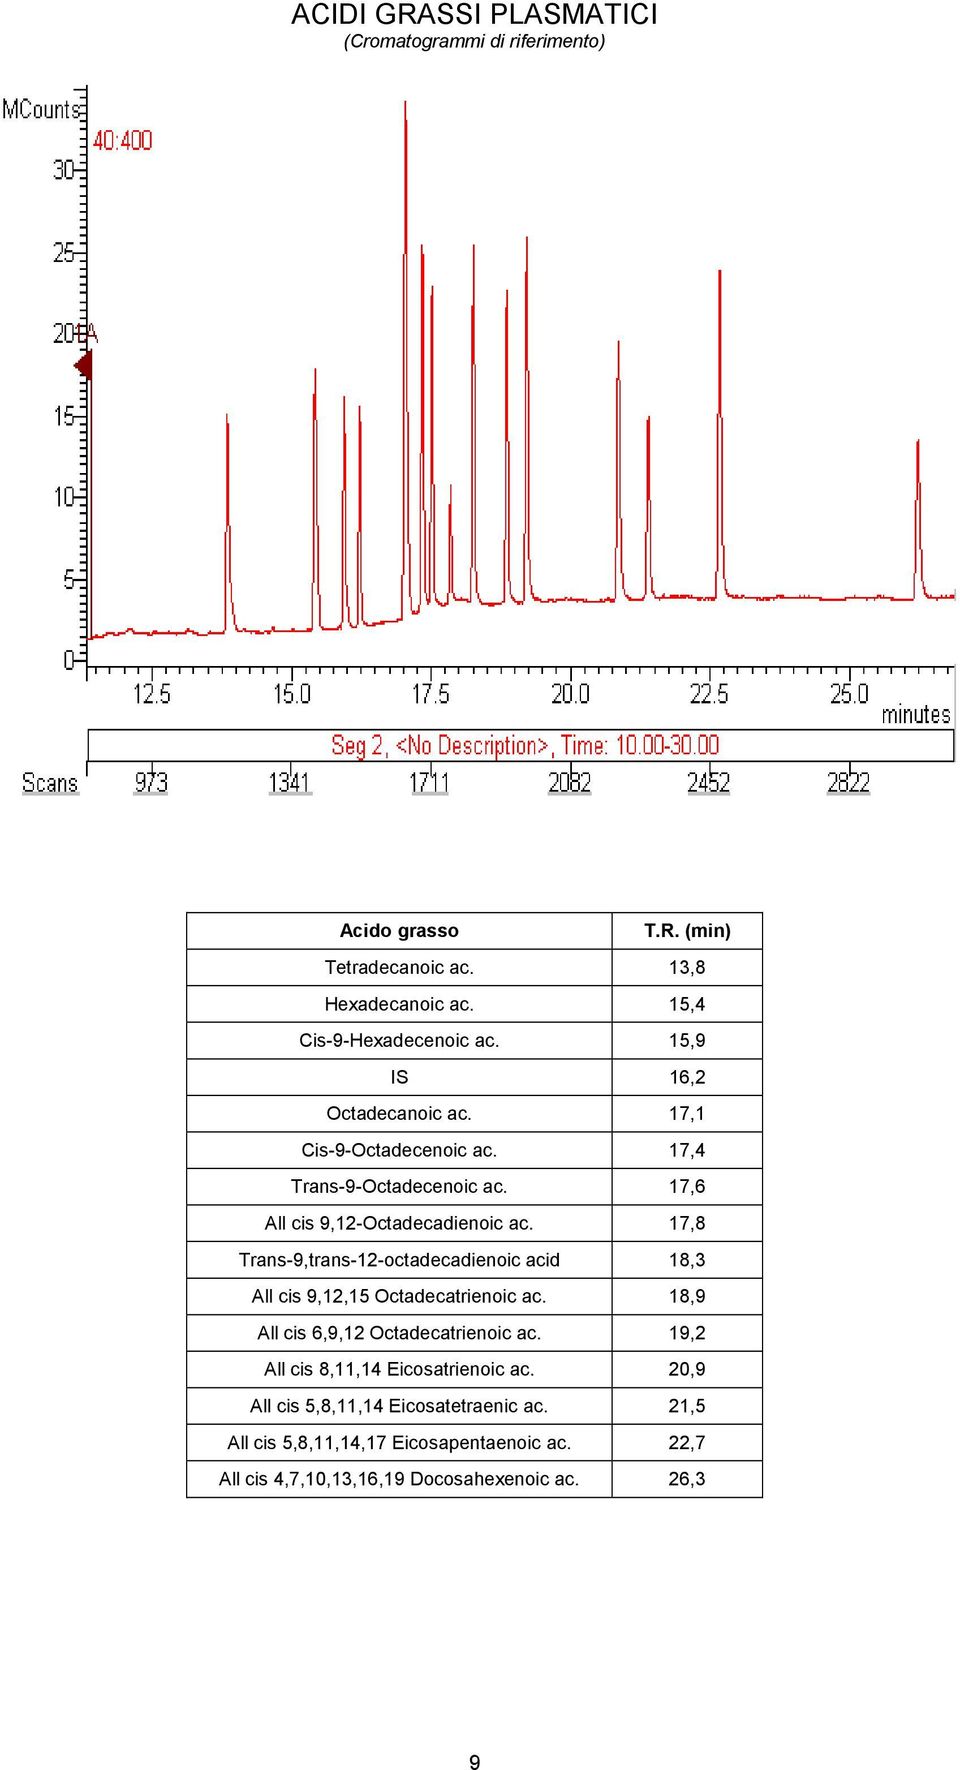 17,8 Trans-9,trans-12-octadecadienoic acid 18,3 All cis 9,12,15 Octadecatrienoic ac. 18,9 All cis 6,9,12 Octadecatrienoic ac.